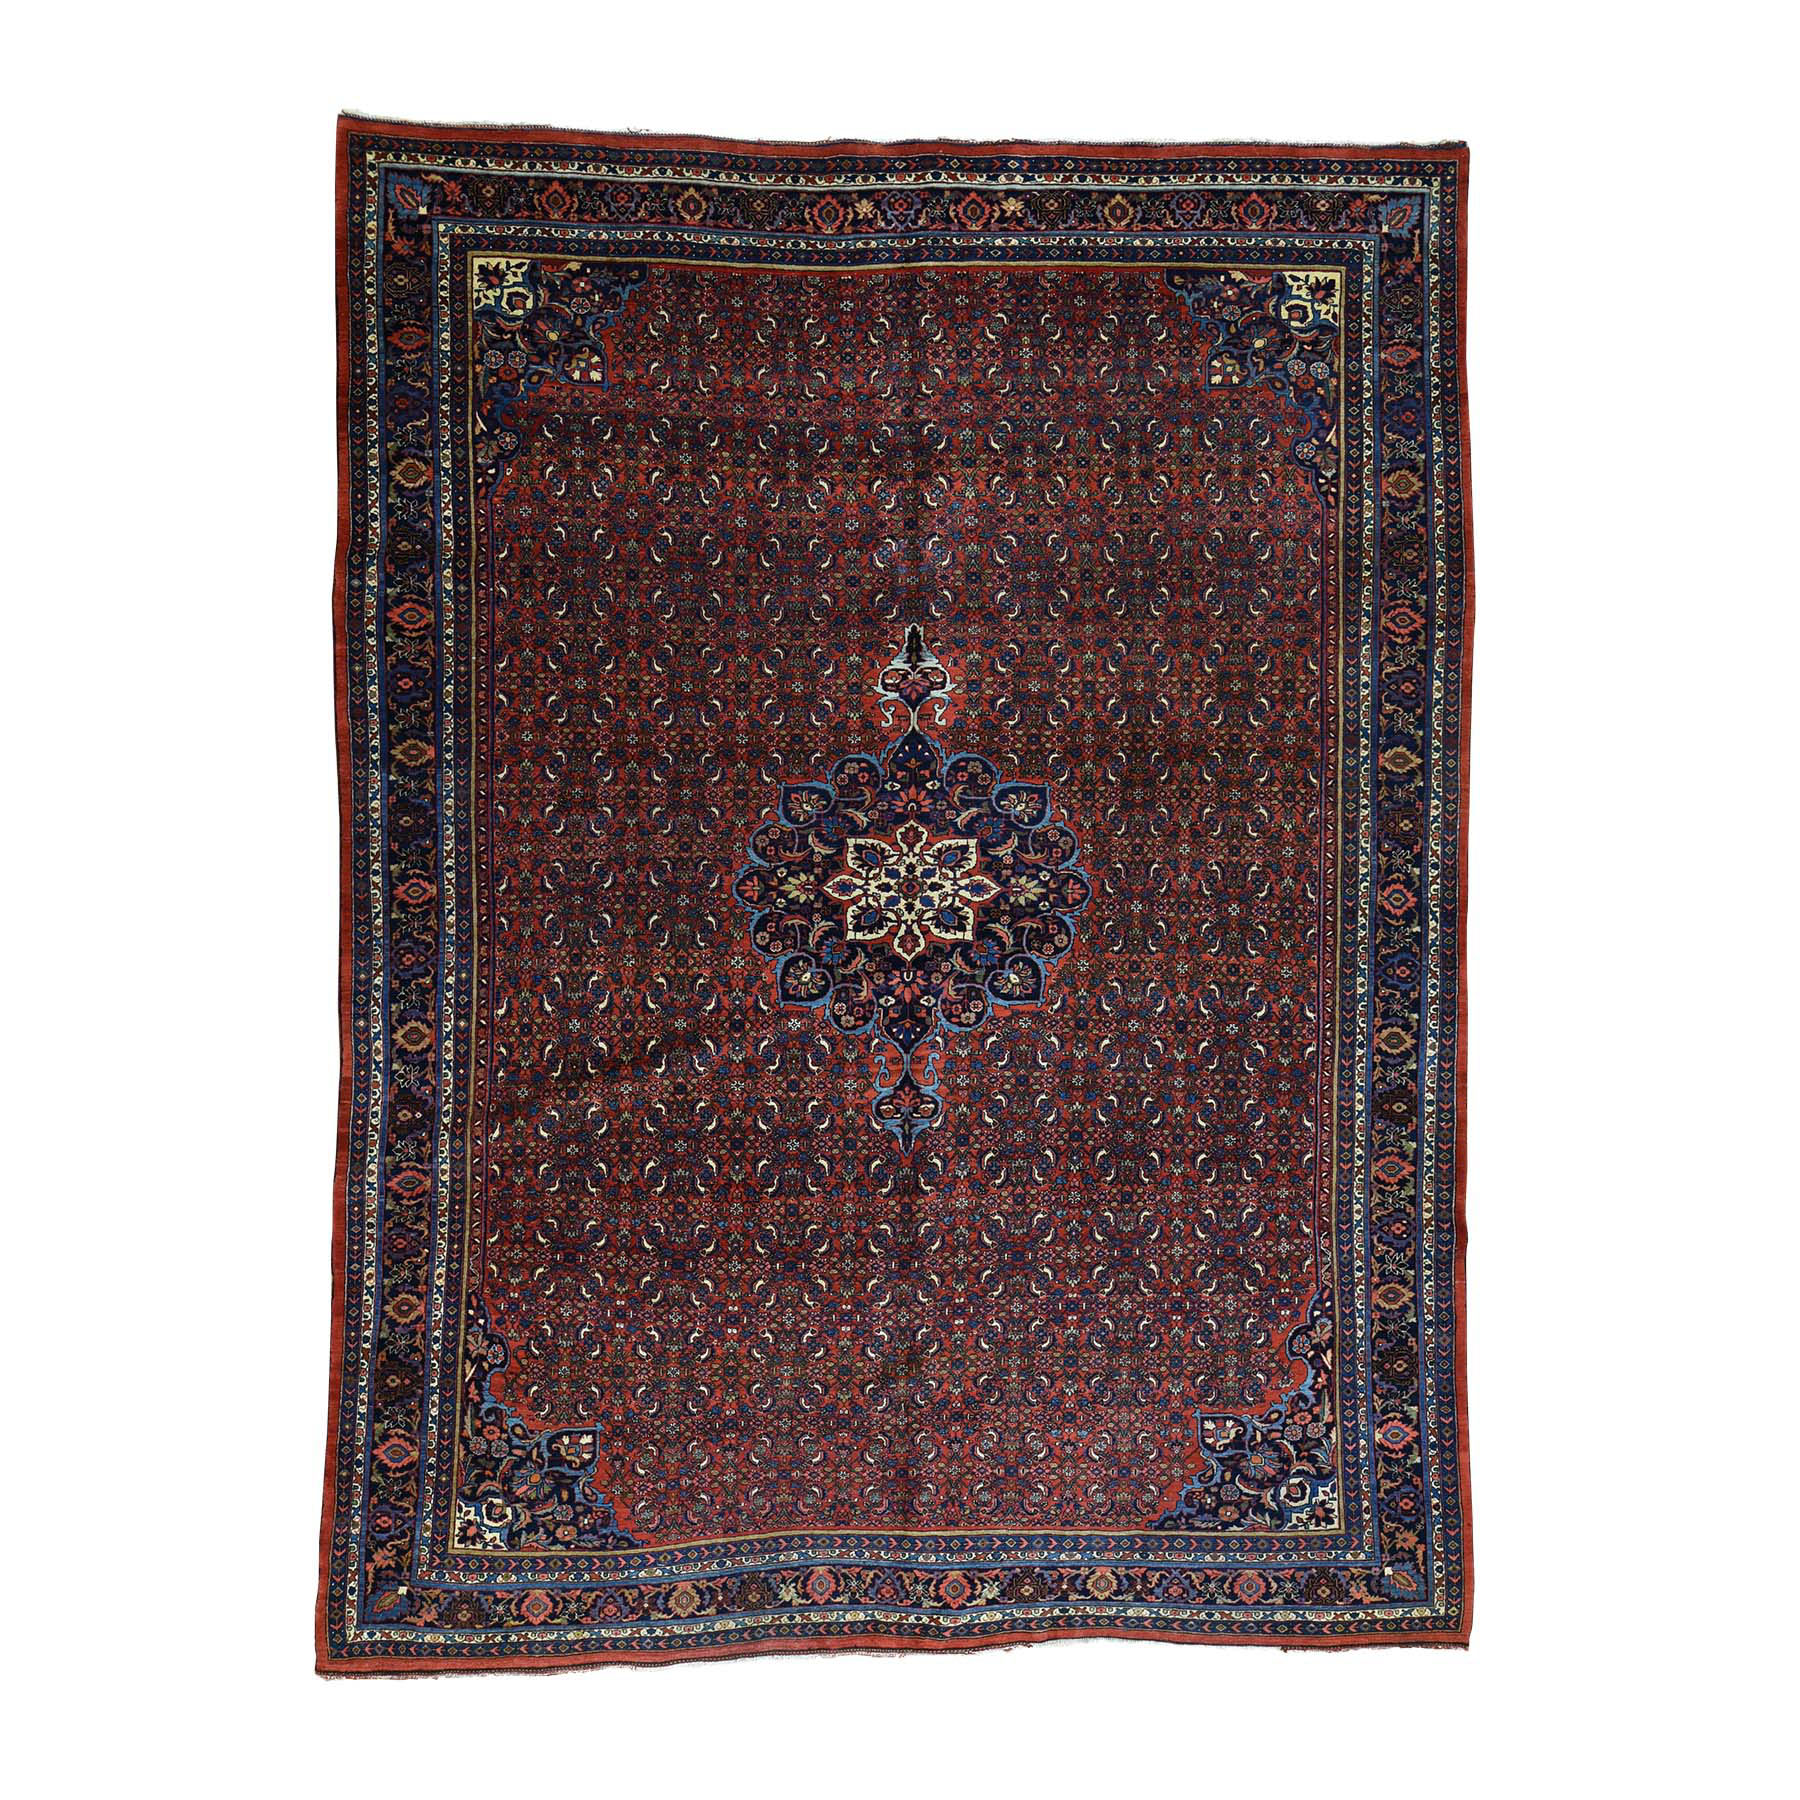 10'5"x13'9" Antique Persian Bijar Exc Cond Hand Woven Oriental Rug 